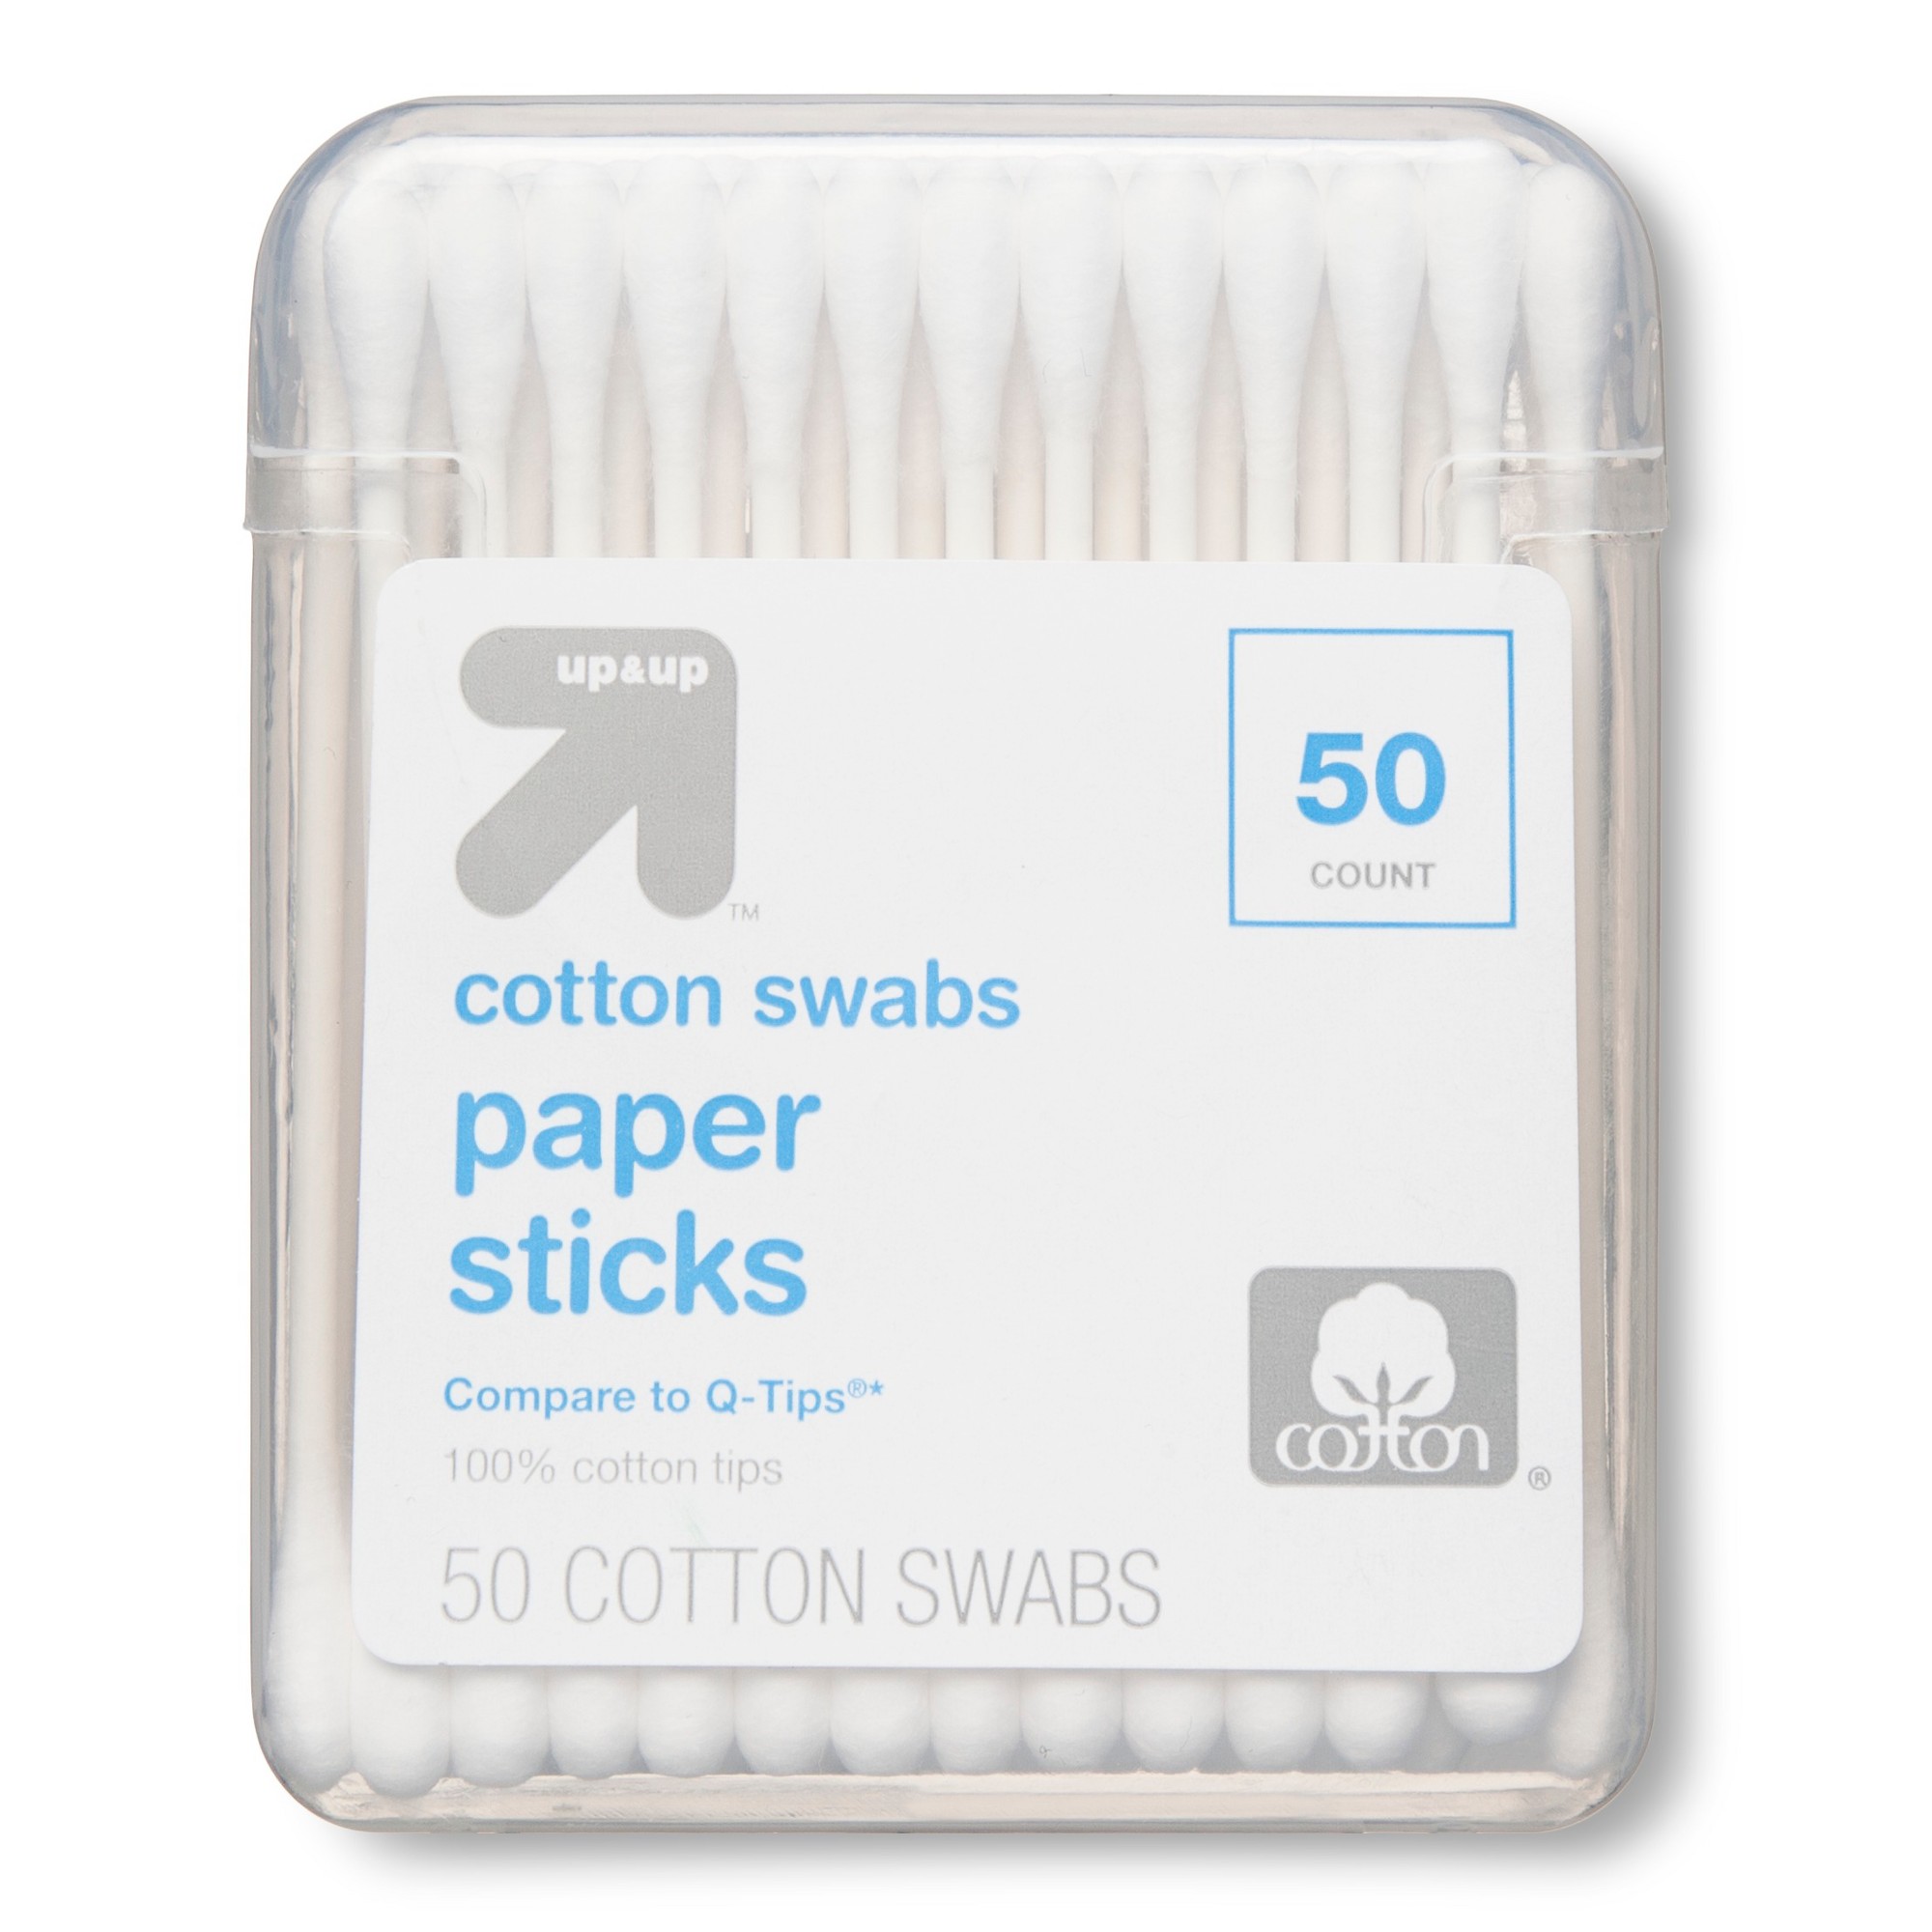 Cotton Swabs Paper Sticks - 50ct - Up&Up